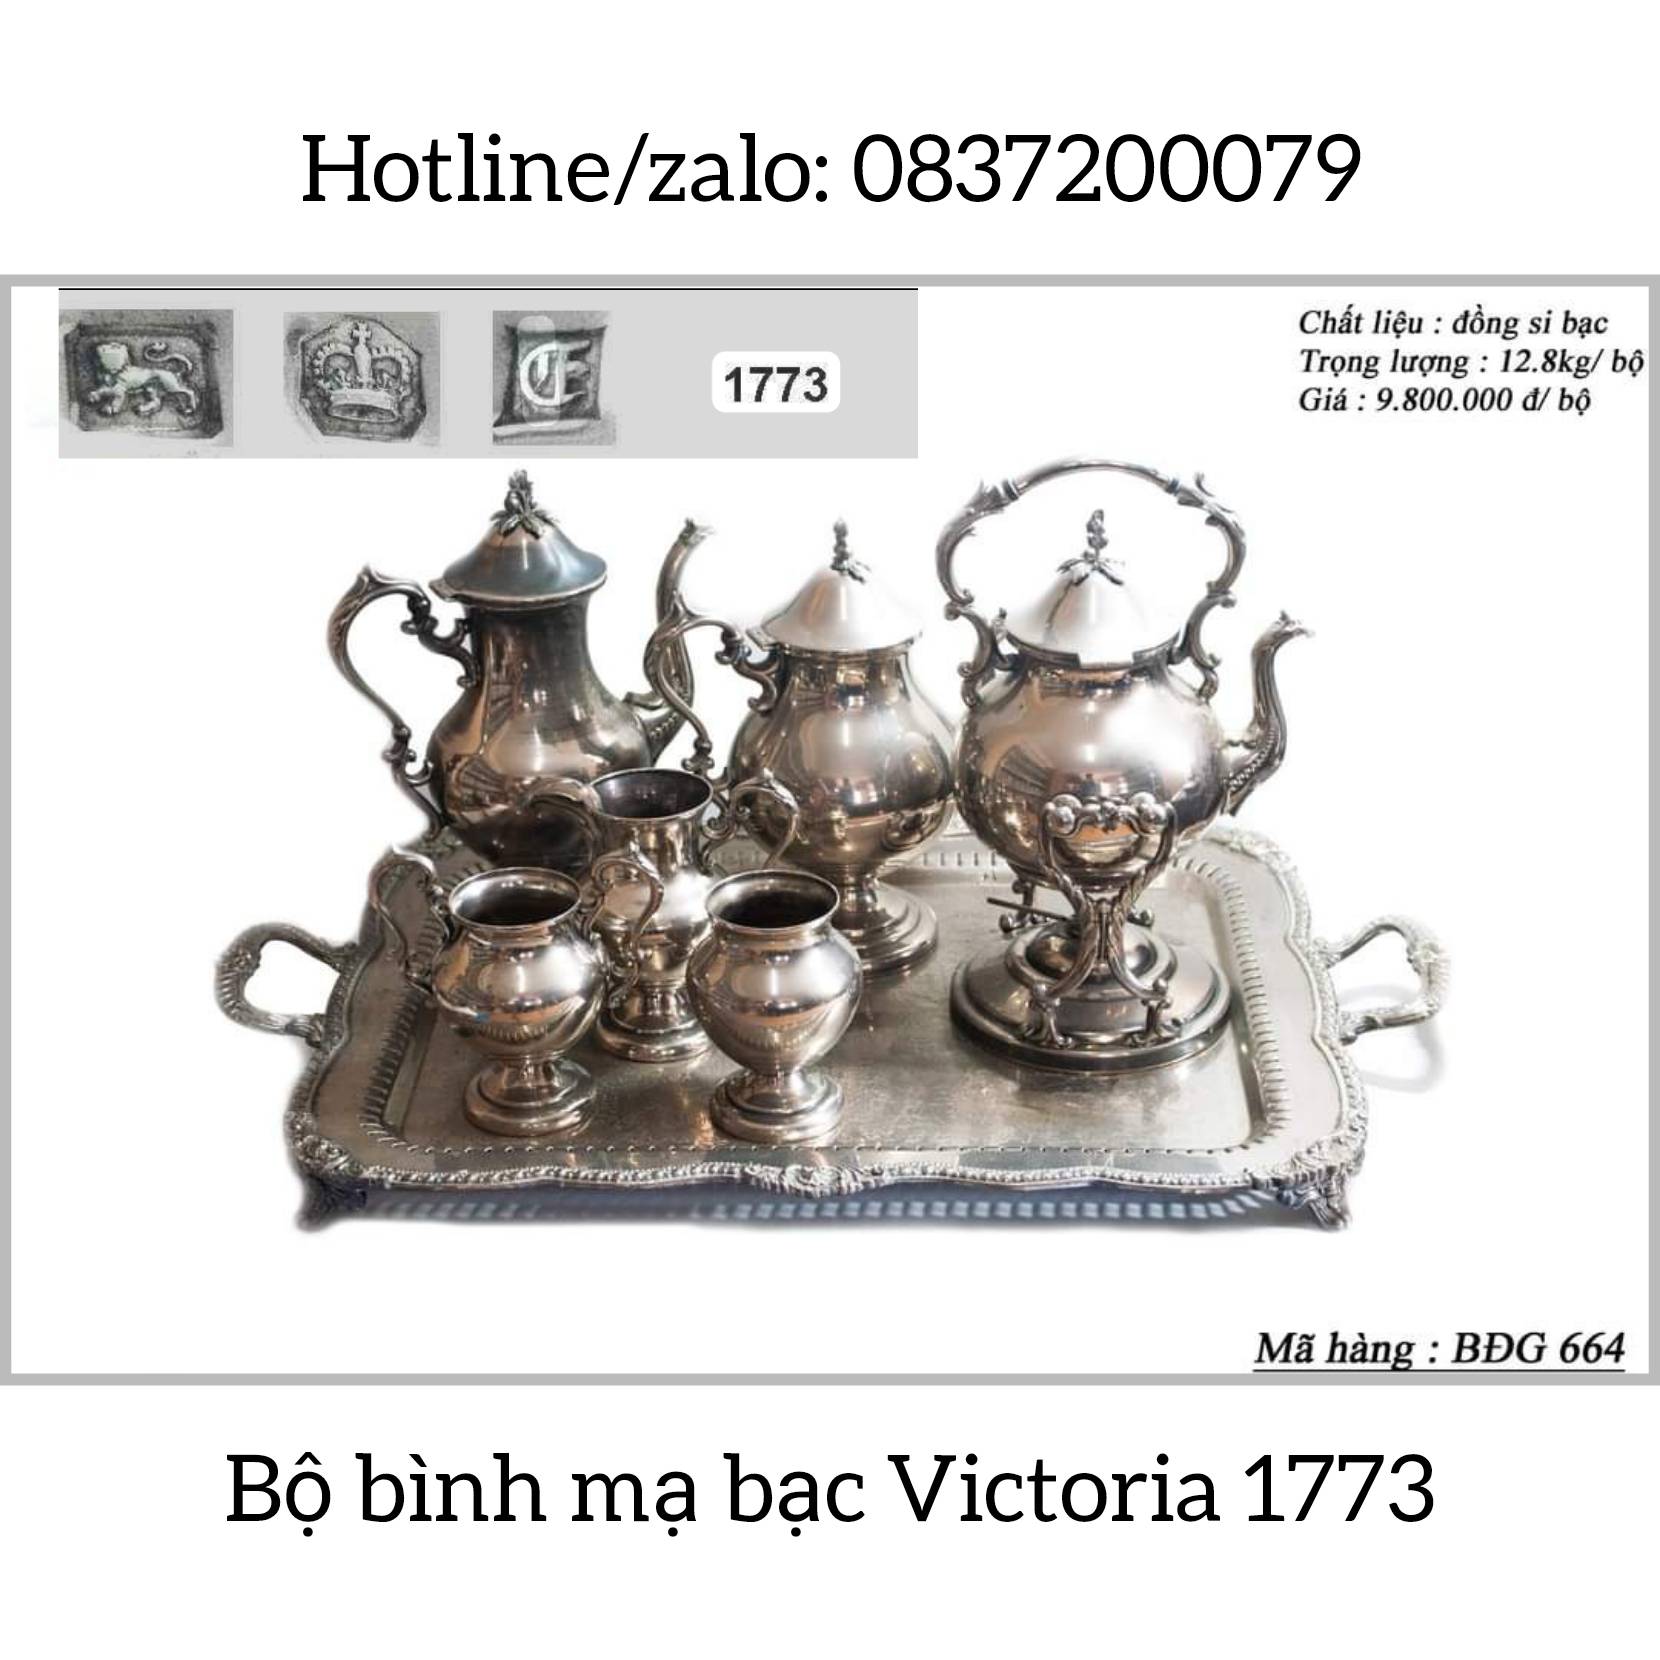 Bộ bình mạ bạc thời Victoria 1773